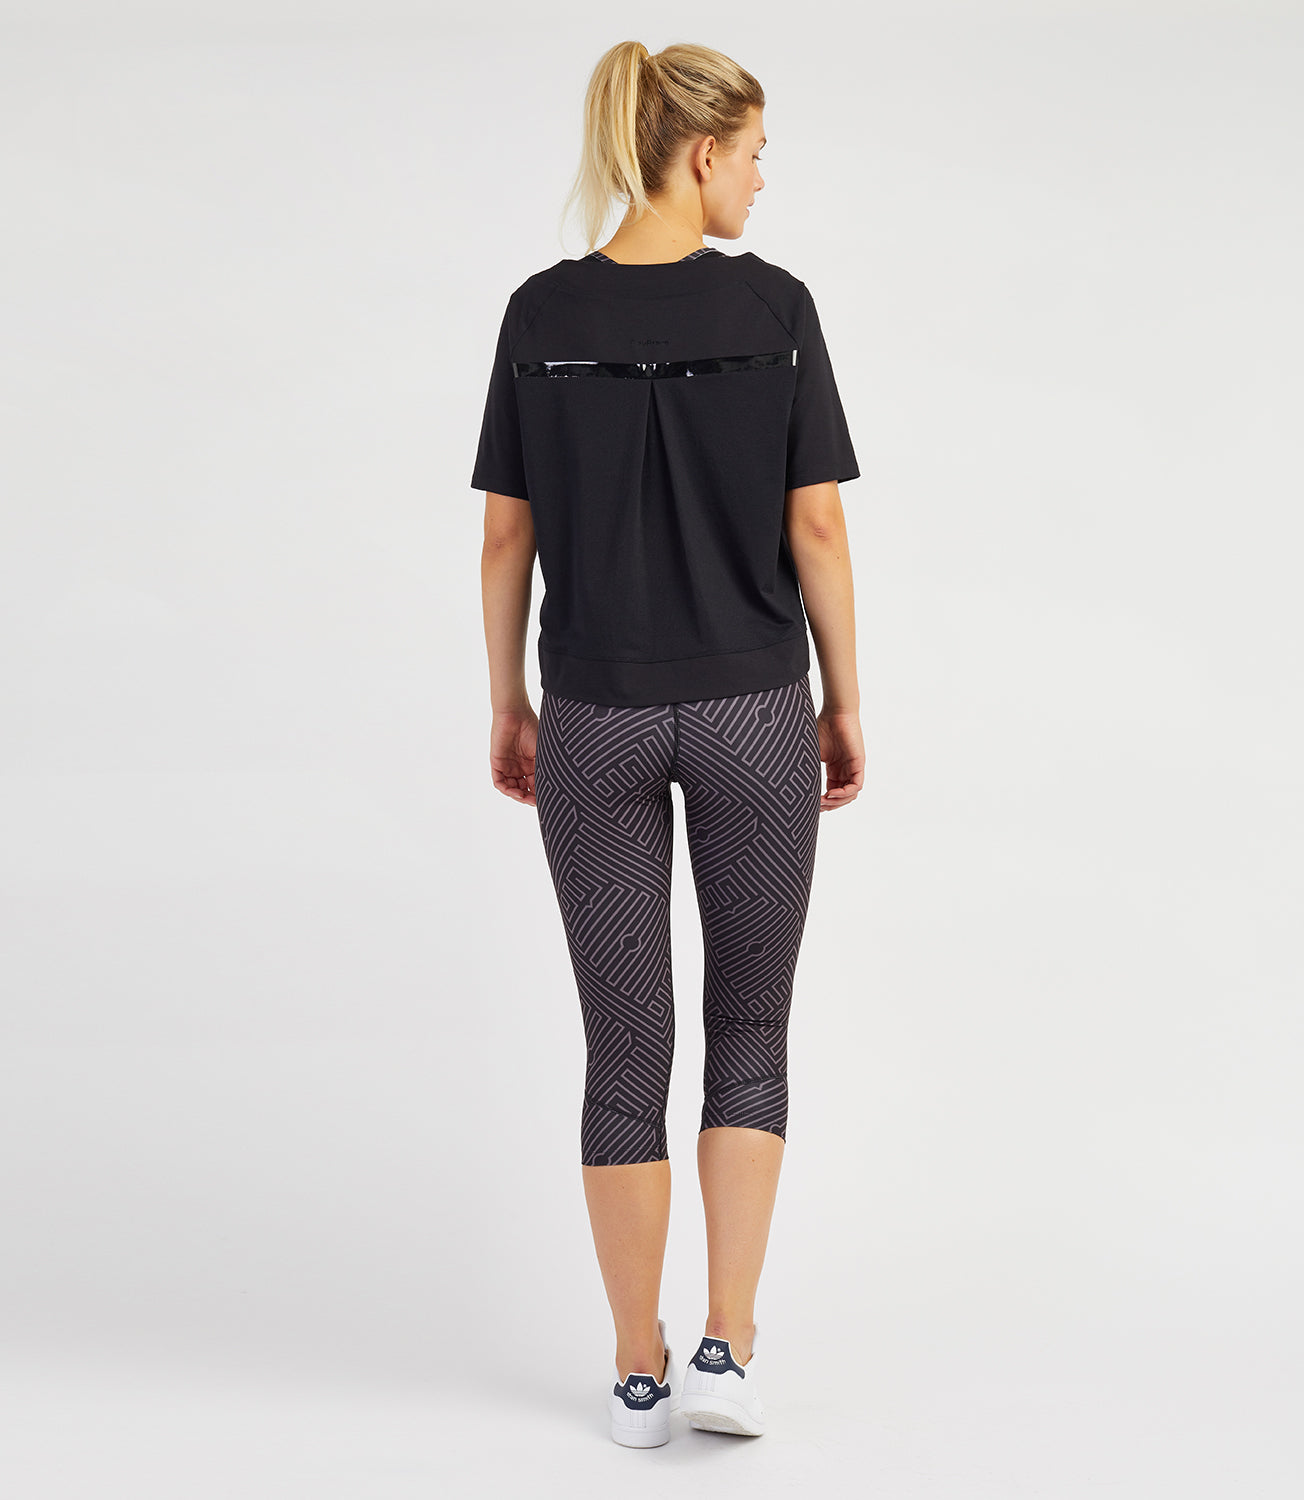 Tennis T-shirt Vests-Women's Tops-Bridget Loose Tee-Black-PlayBrave Sports UK